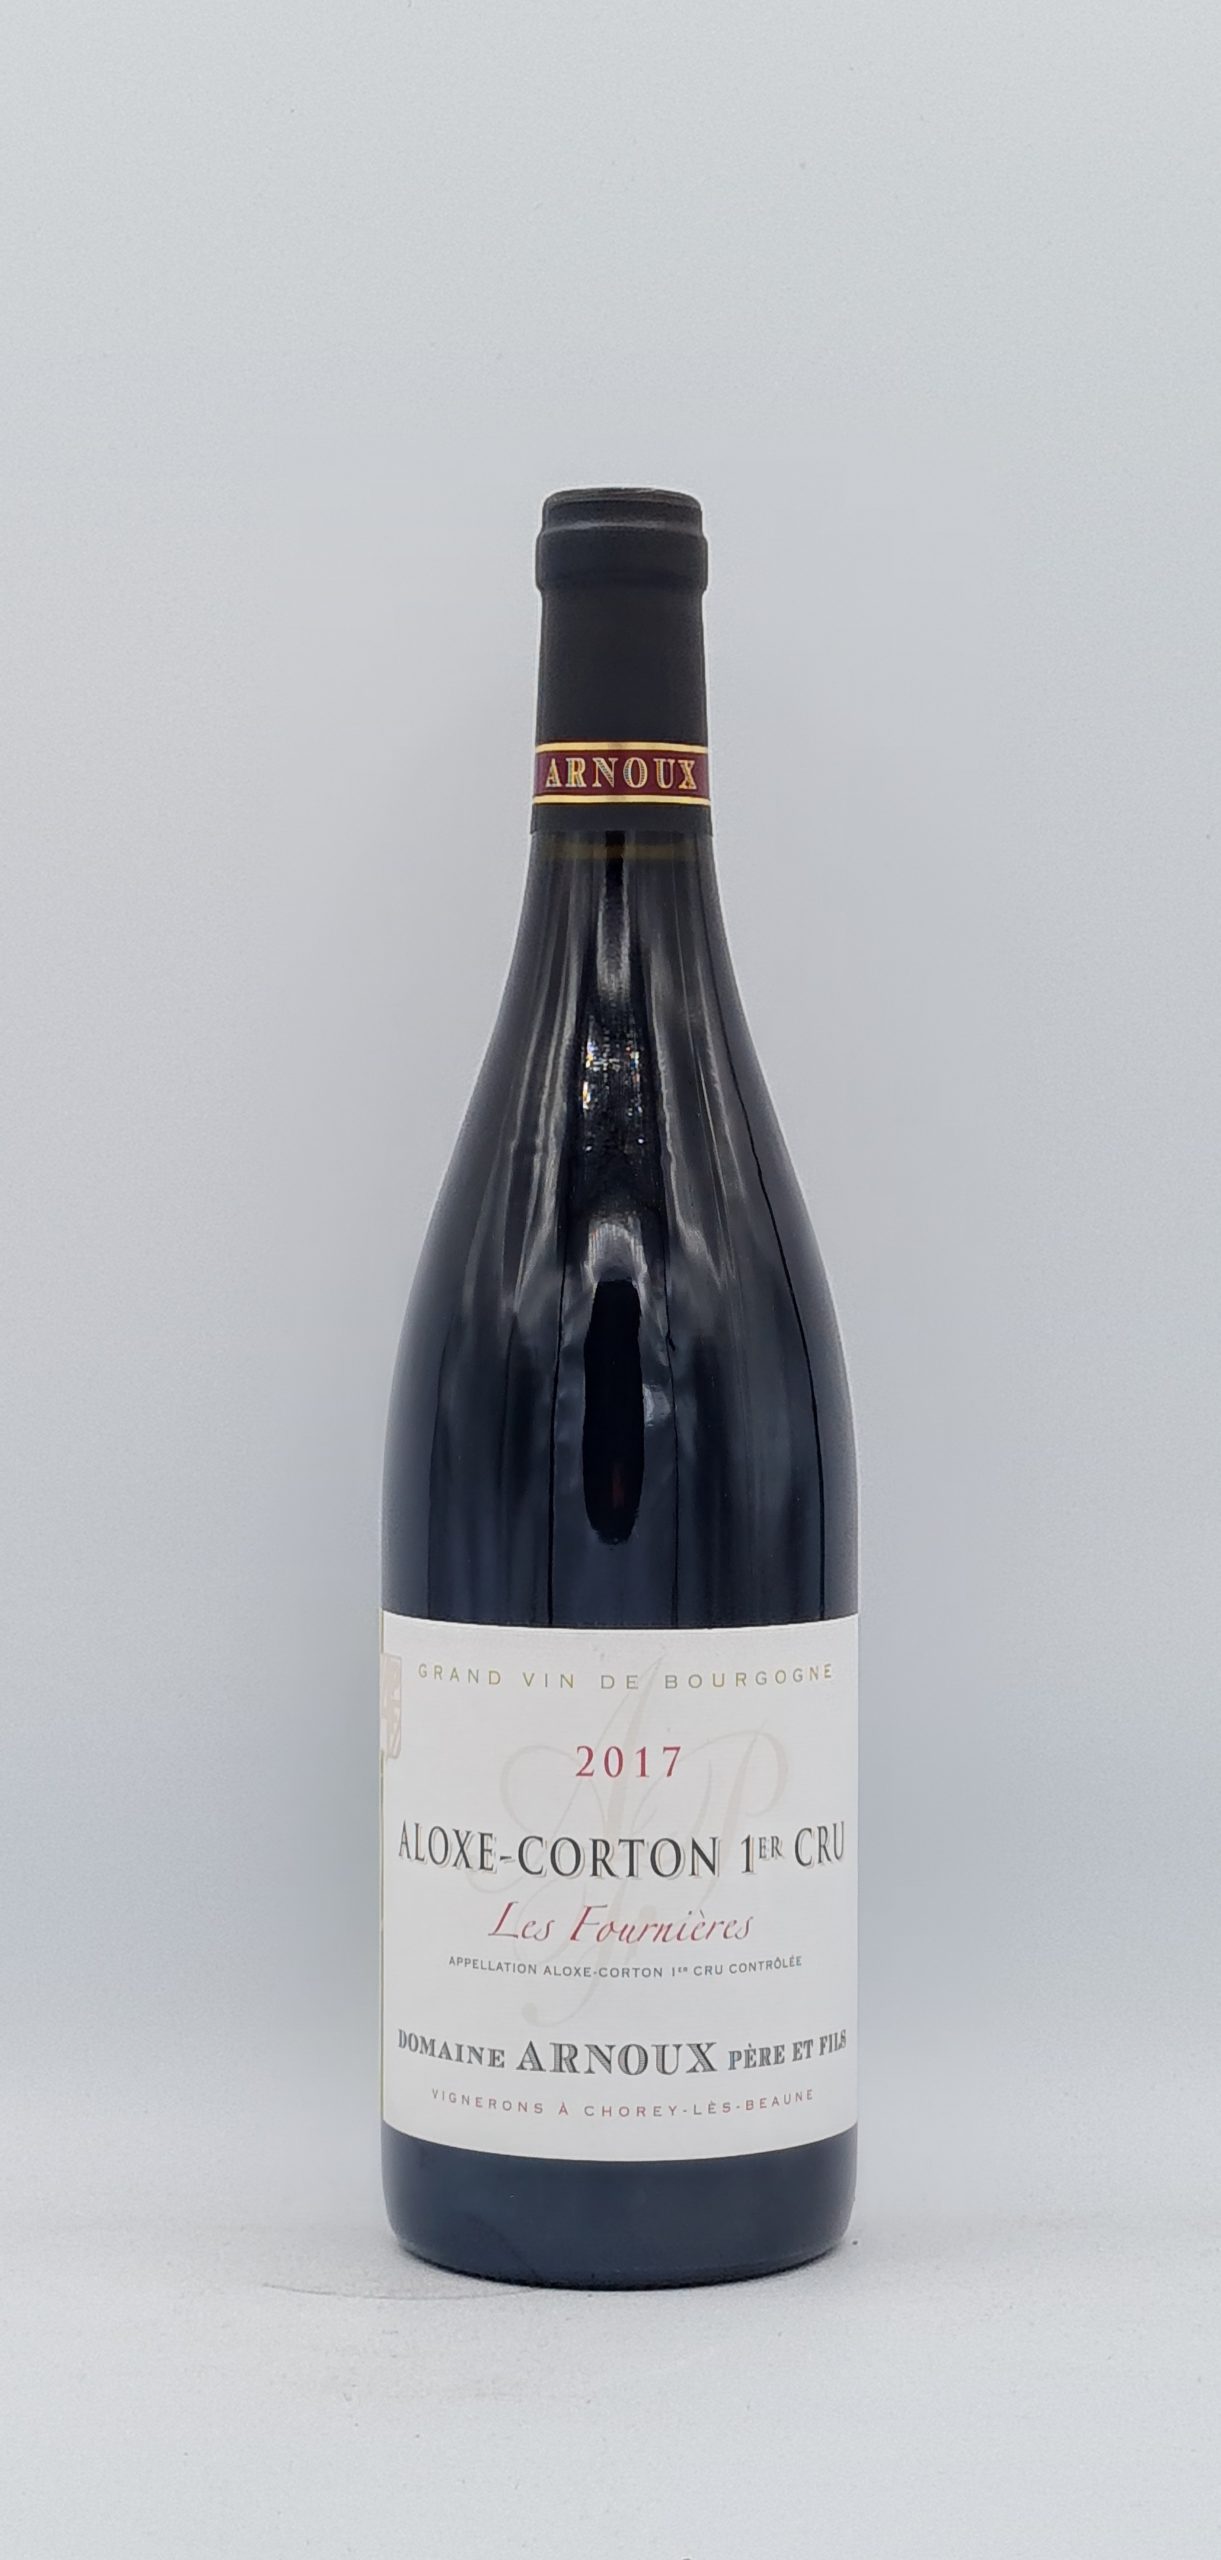 Bourgogne Aloxe-Corton 1er cru “Fournière” 2017 Domaine Arnoux